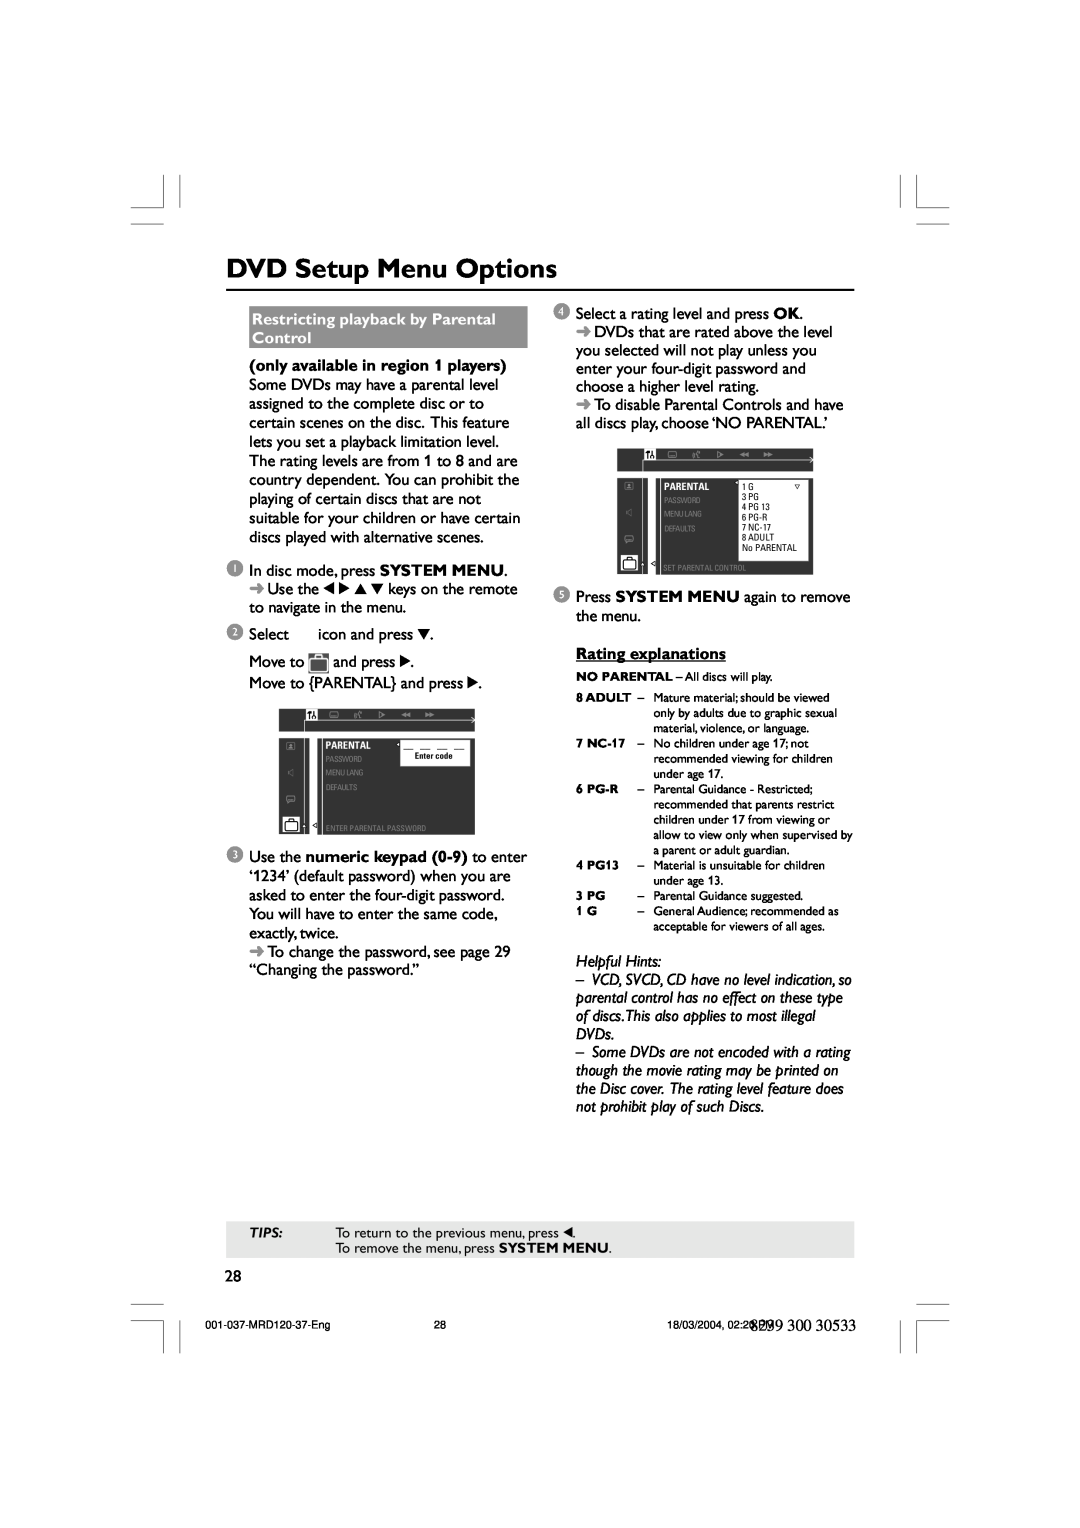 Magnavox MRD120 DVD Setup Menu Options, Restricting playback by Parental Control, Rating explanations, Helpful Hints, 8239 